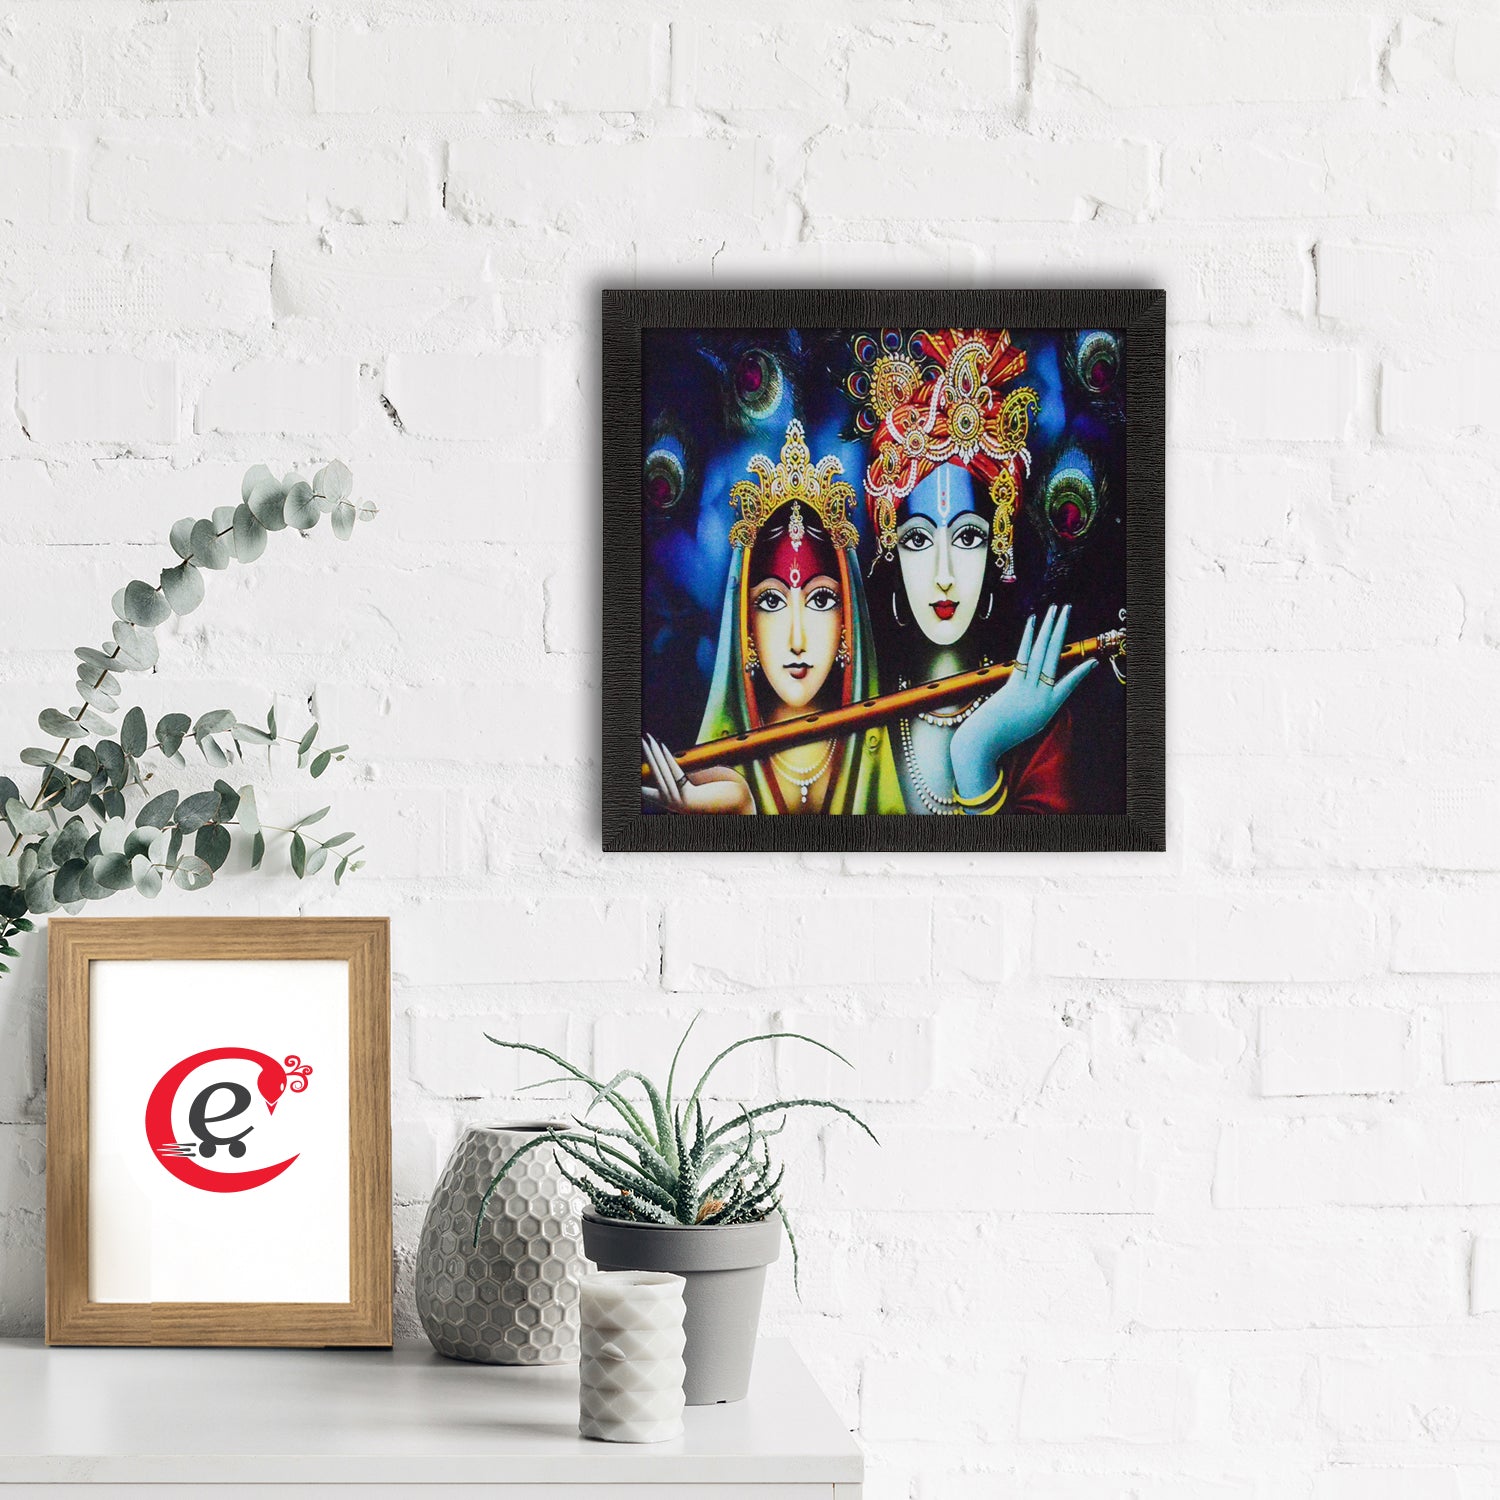 Radha Krishna Holding Flute In Hand Wall Painting Digital Printed Religious Art 1